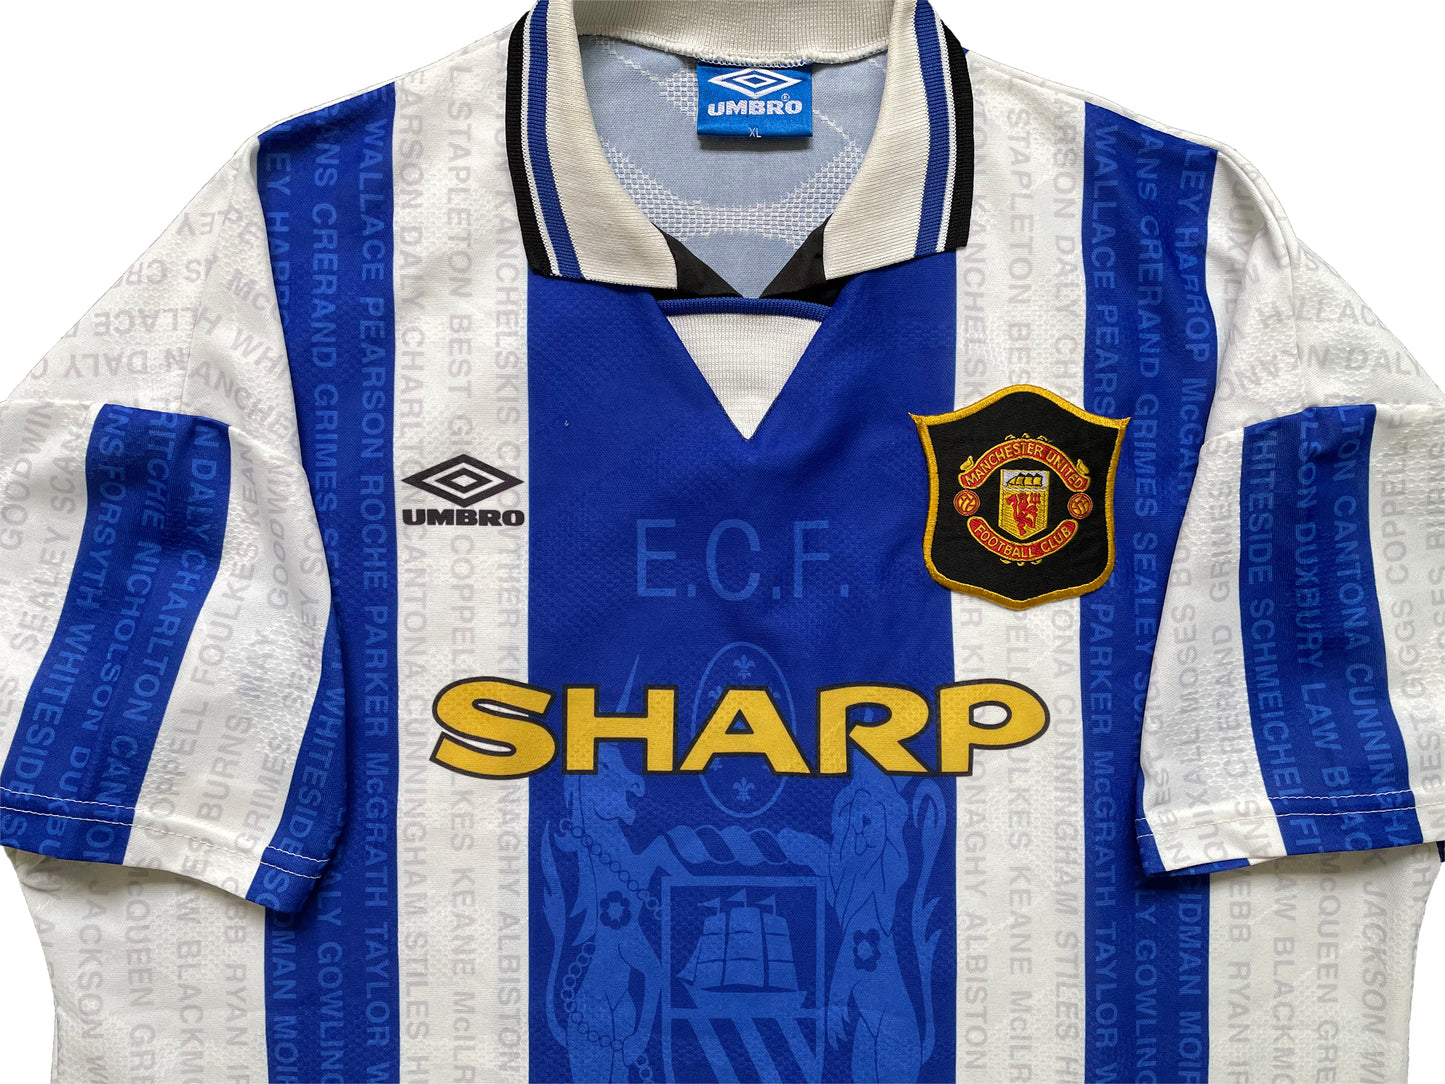 <tc>1994-1996 Manchester United FC tercera camiseta (XL)</tc>